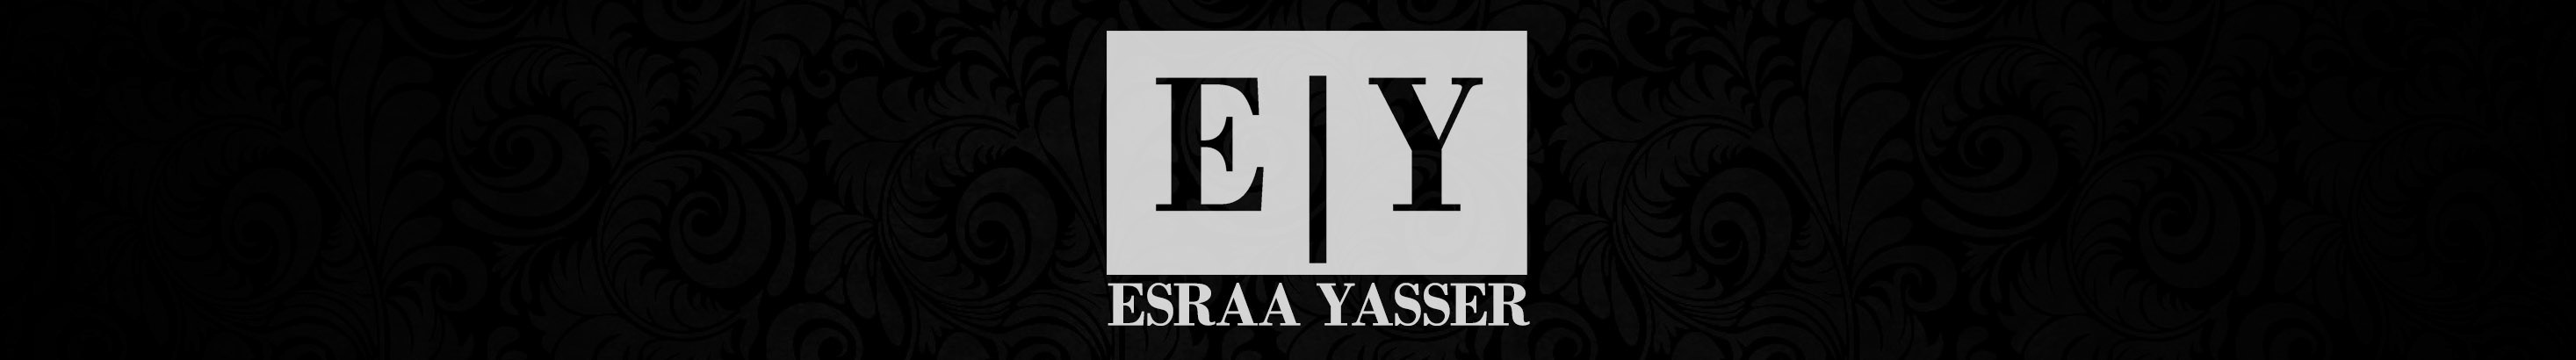 Esraa Yasser のプロファイルバナー